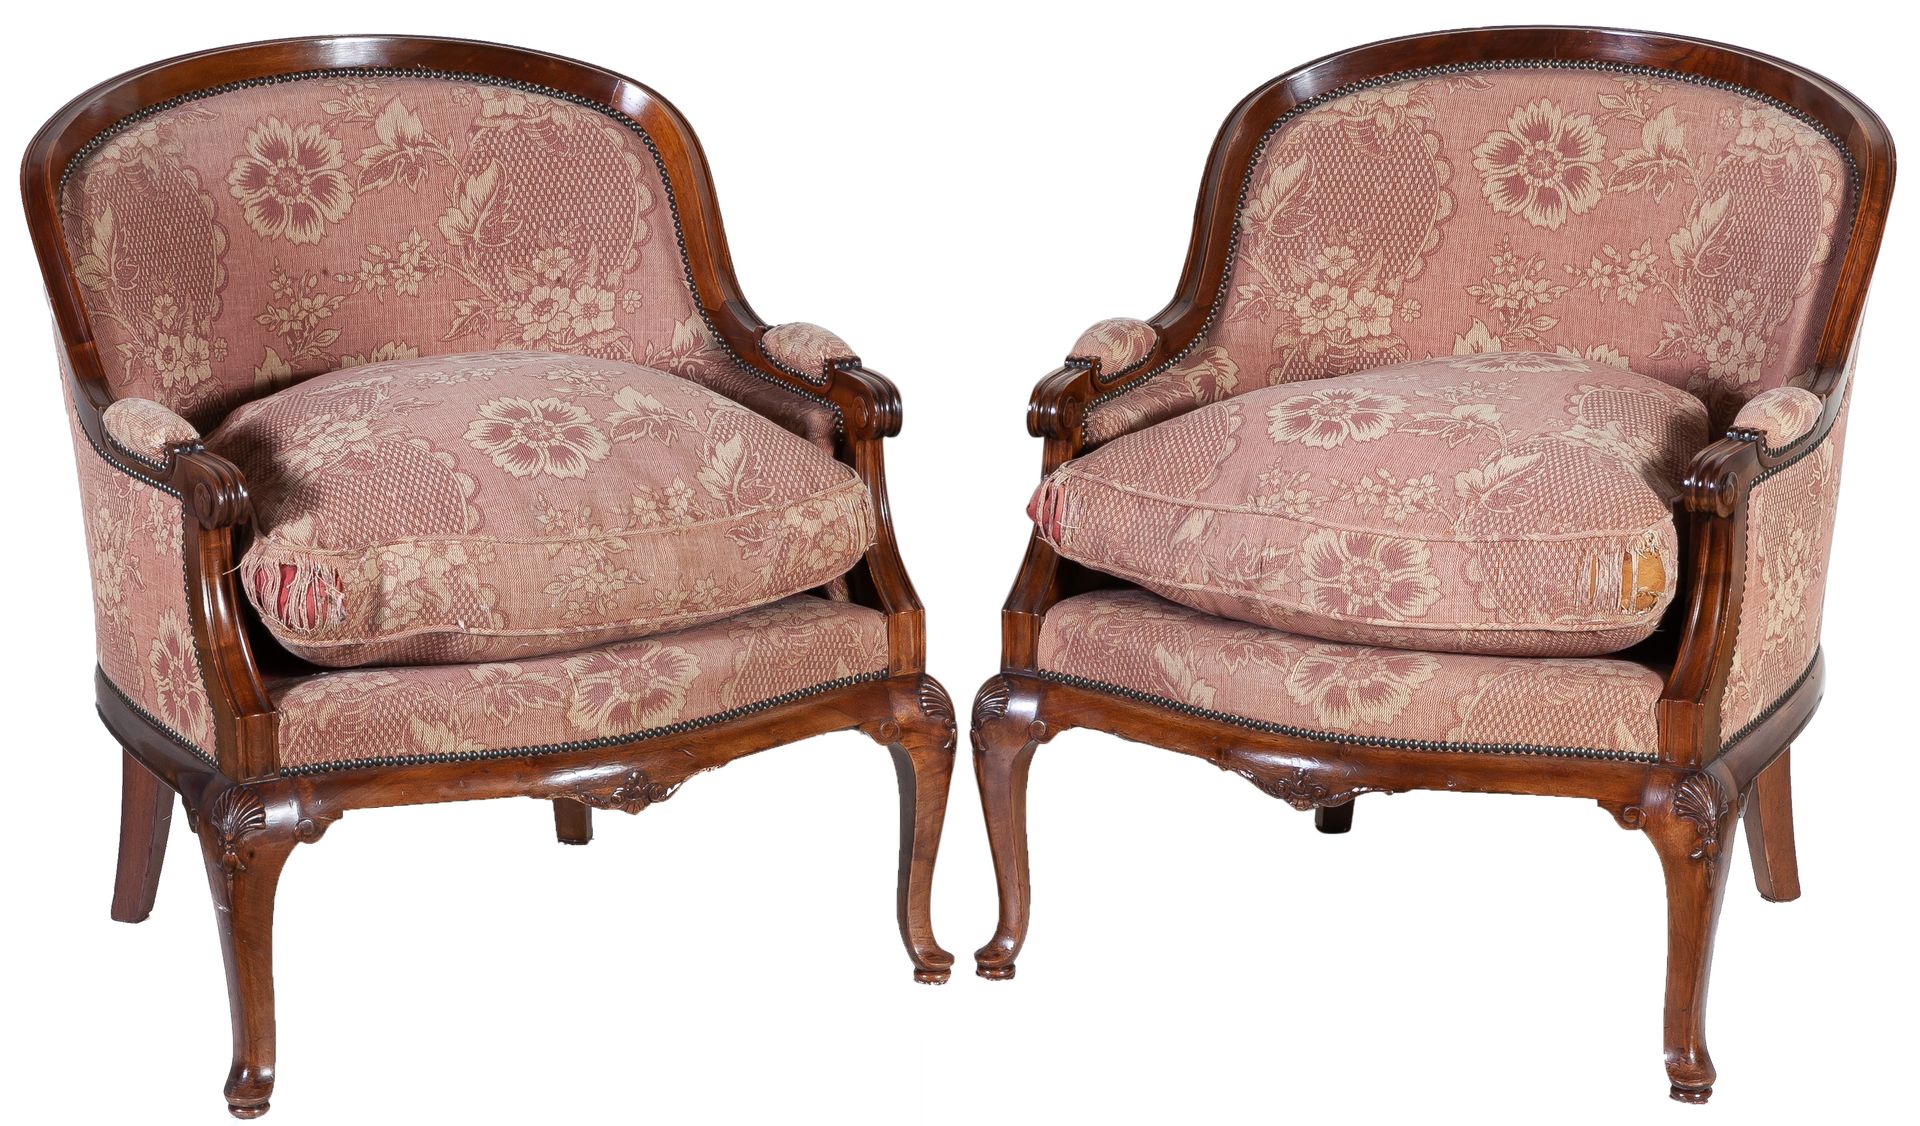 Null Paar Mahagoni-Bergère-Sessel mit umlaufender Rückenlehne

80 x 68 x 70 cm

&hellip;